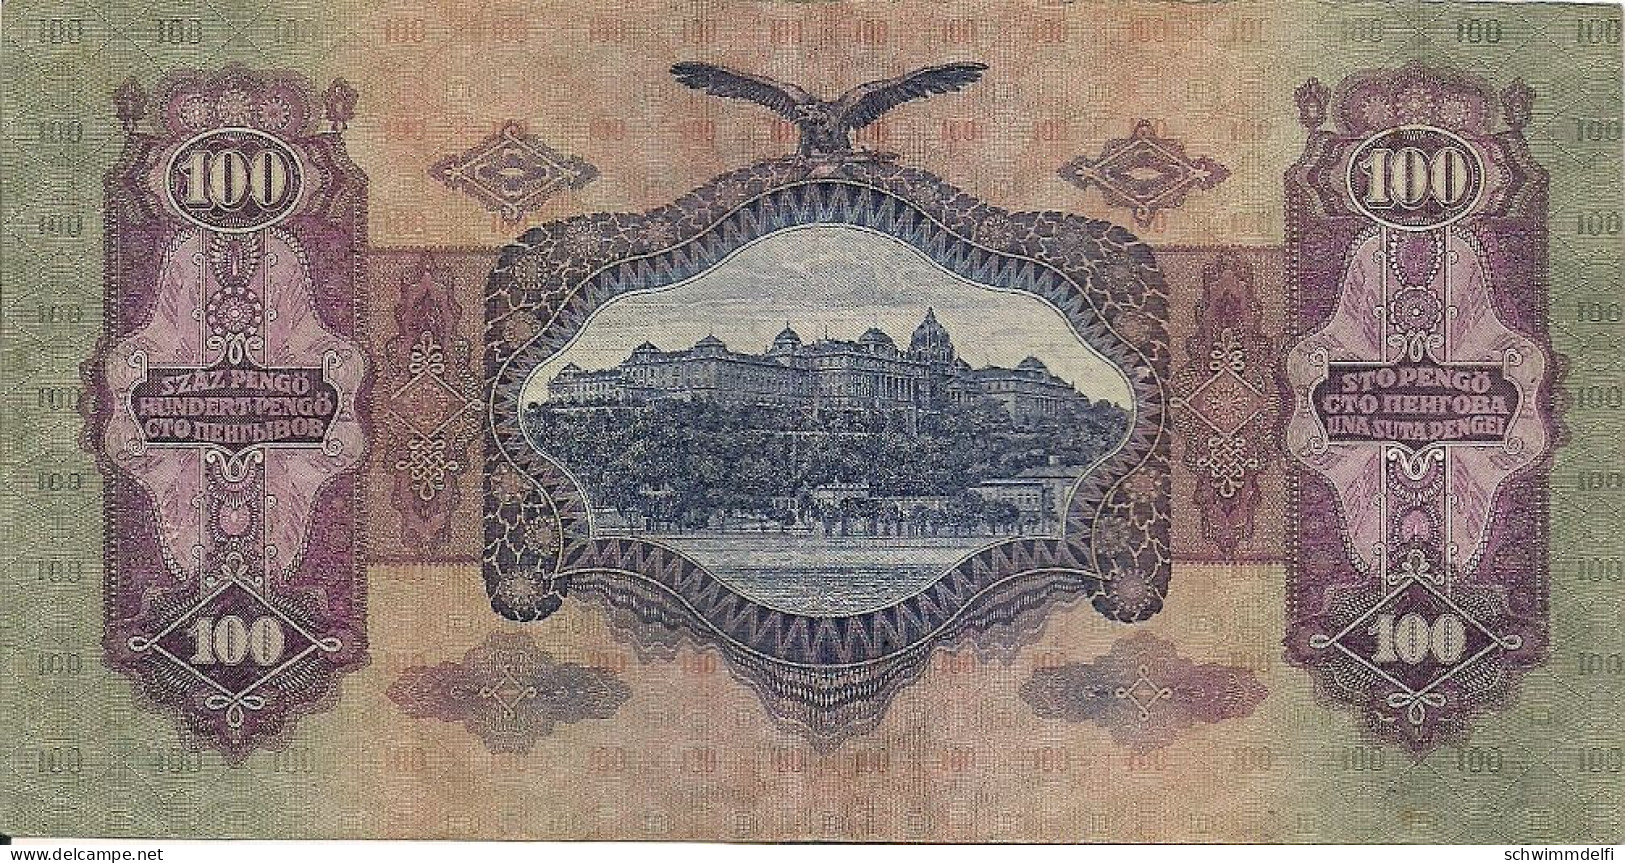 HUNGRÍA - UNGARN - HUNGARY - 100 PENGÖ 1930 - EBC - SEHR SCHON - VERY FINE - Hongarije